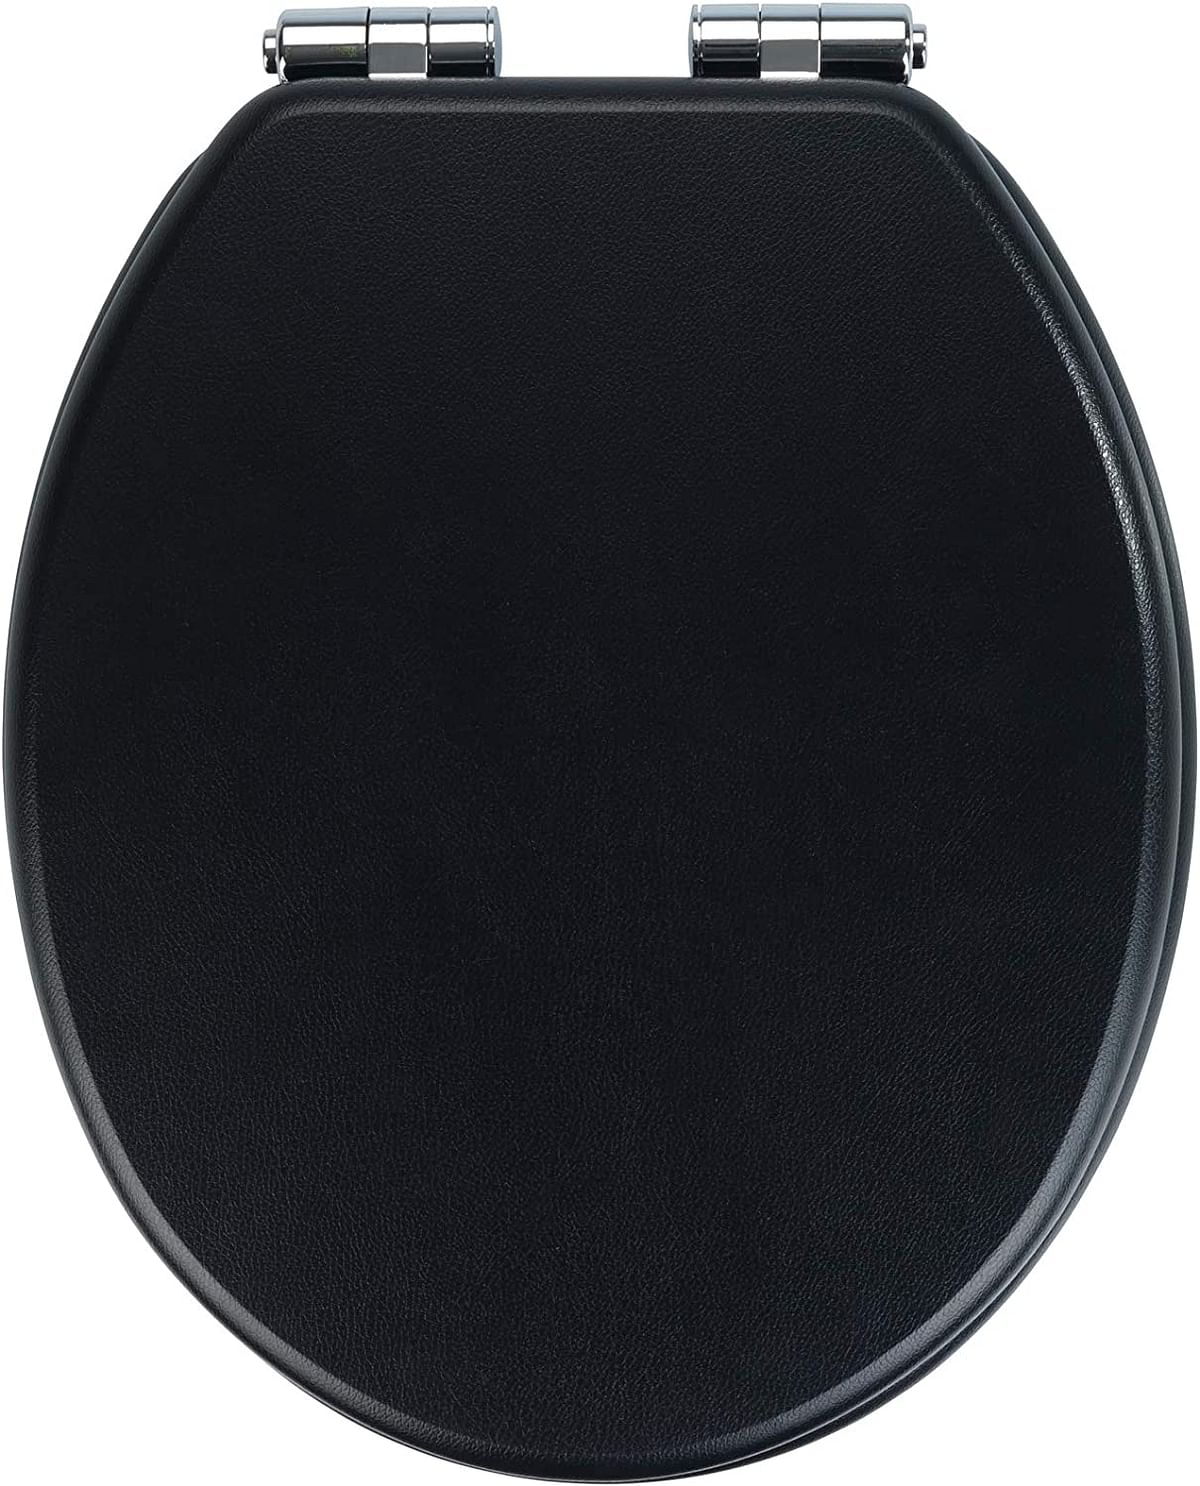 WENKO, Toilet Seat Cuero Black, MDF, Leather Design, Non-Slam Anti-Bacterial Seat for Bathroom, Soft Close & Easy Clean, 35.5x42.5cm, Black